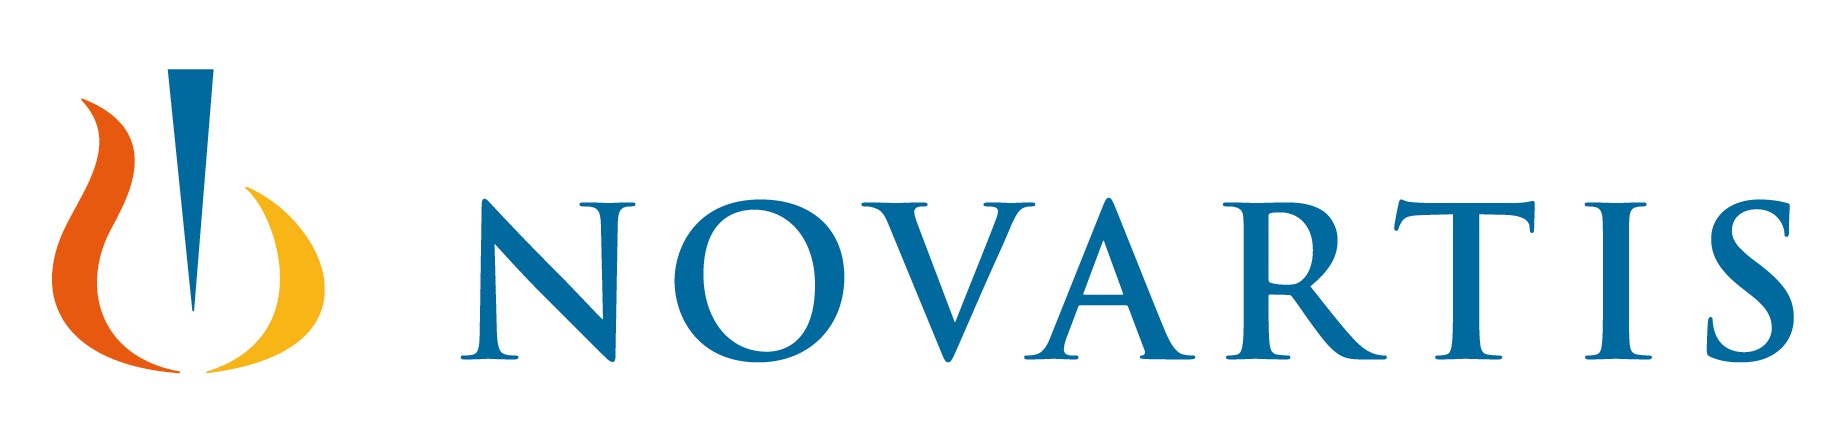 Novartis Logo photo - 1